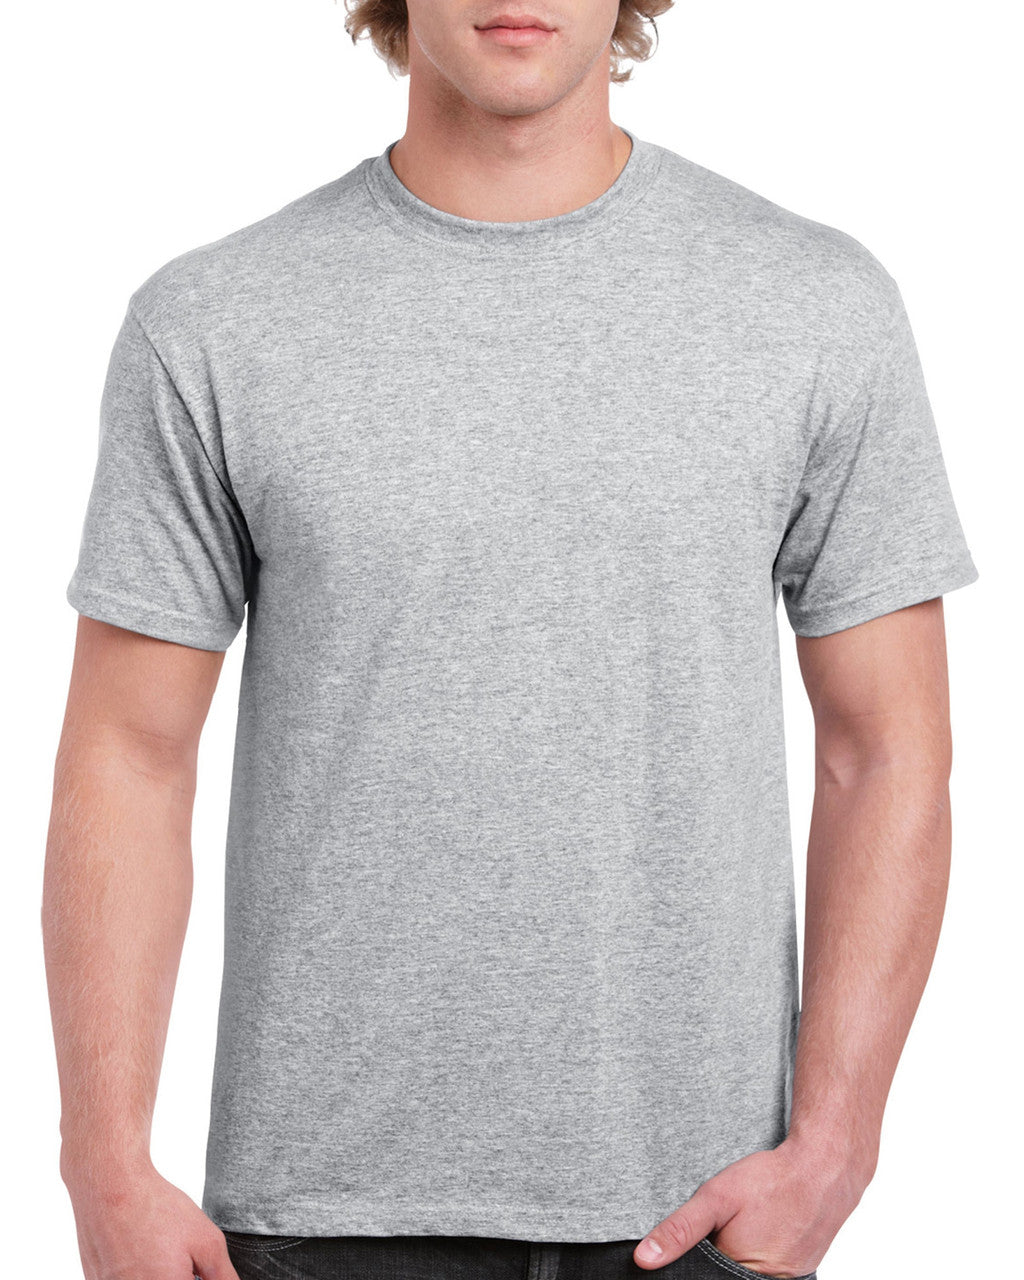 CLEARANCE Gildan T-Shirt - SPORT GREY